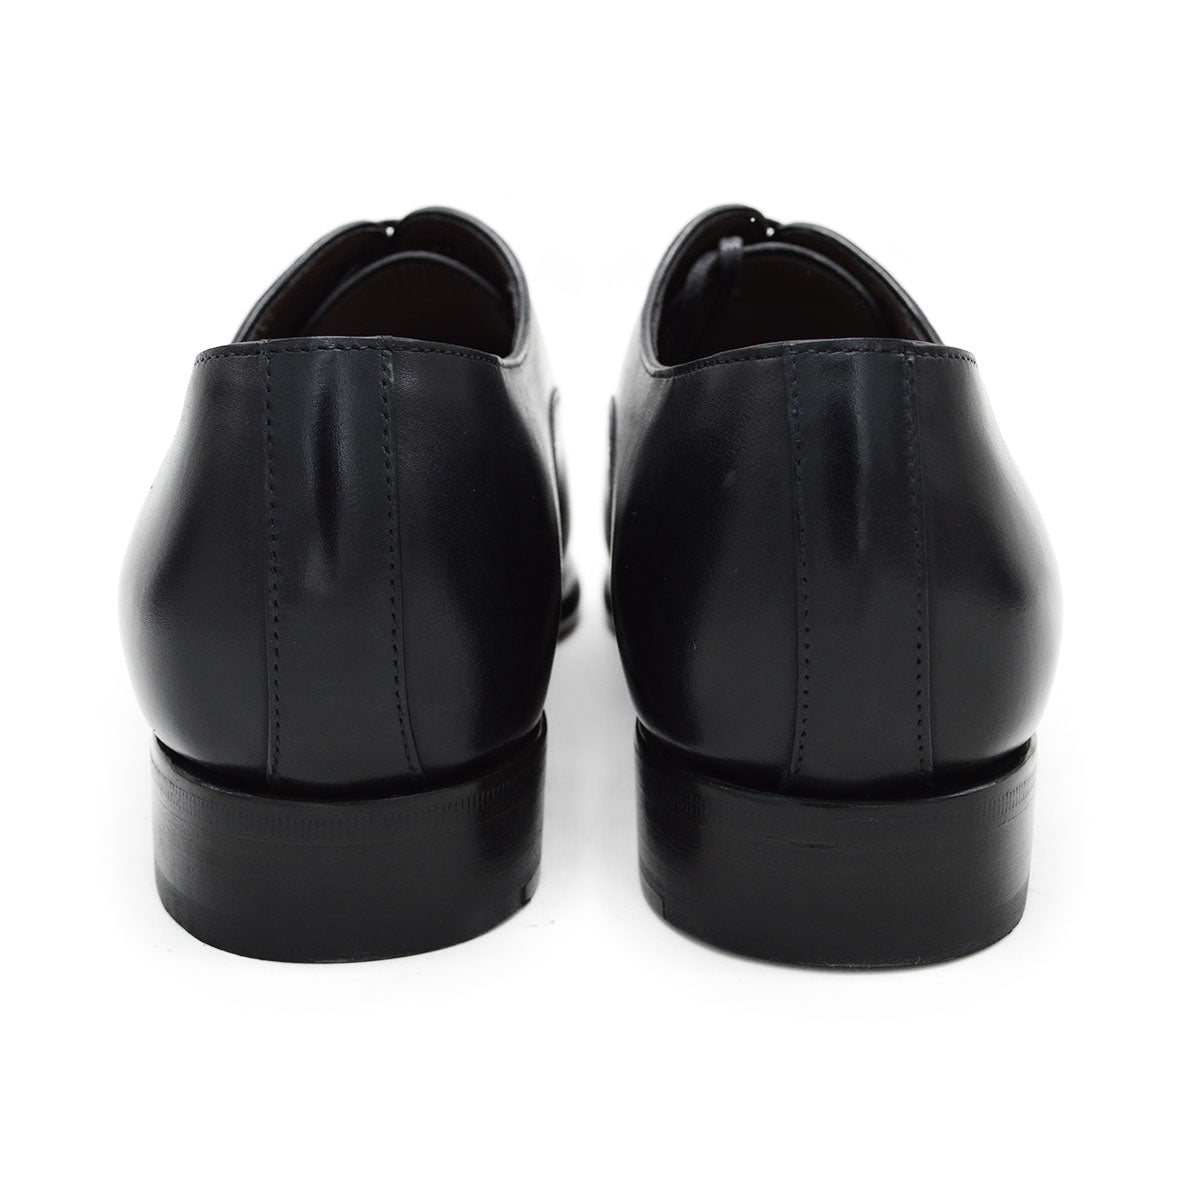 Carlos Santos Straight Cap Oxford (1120)- Black – A Fine Pair of Shoes